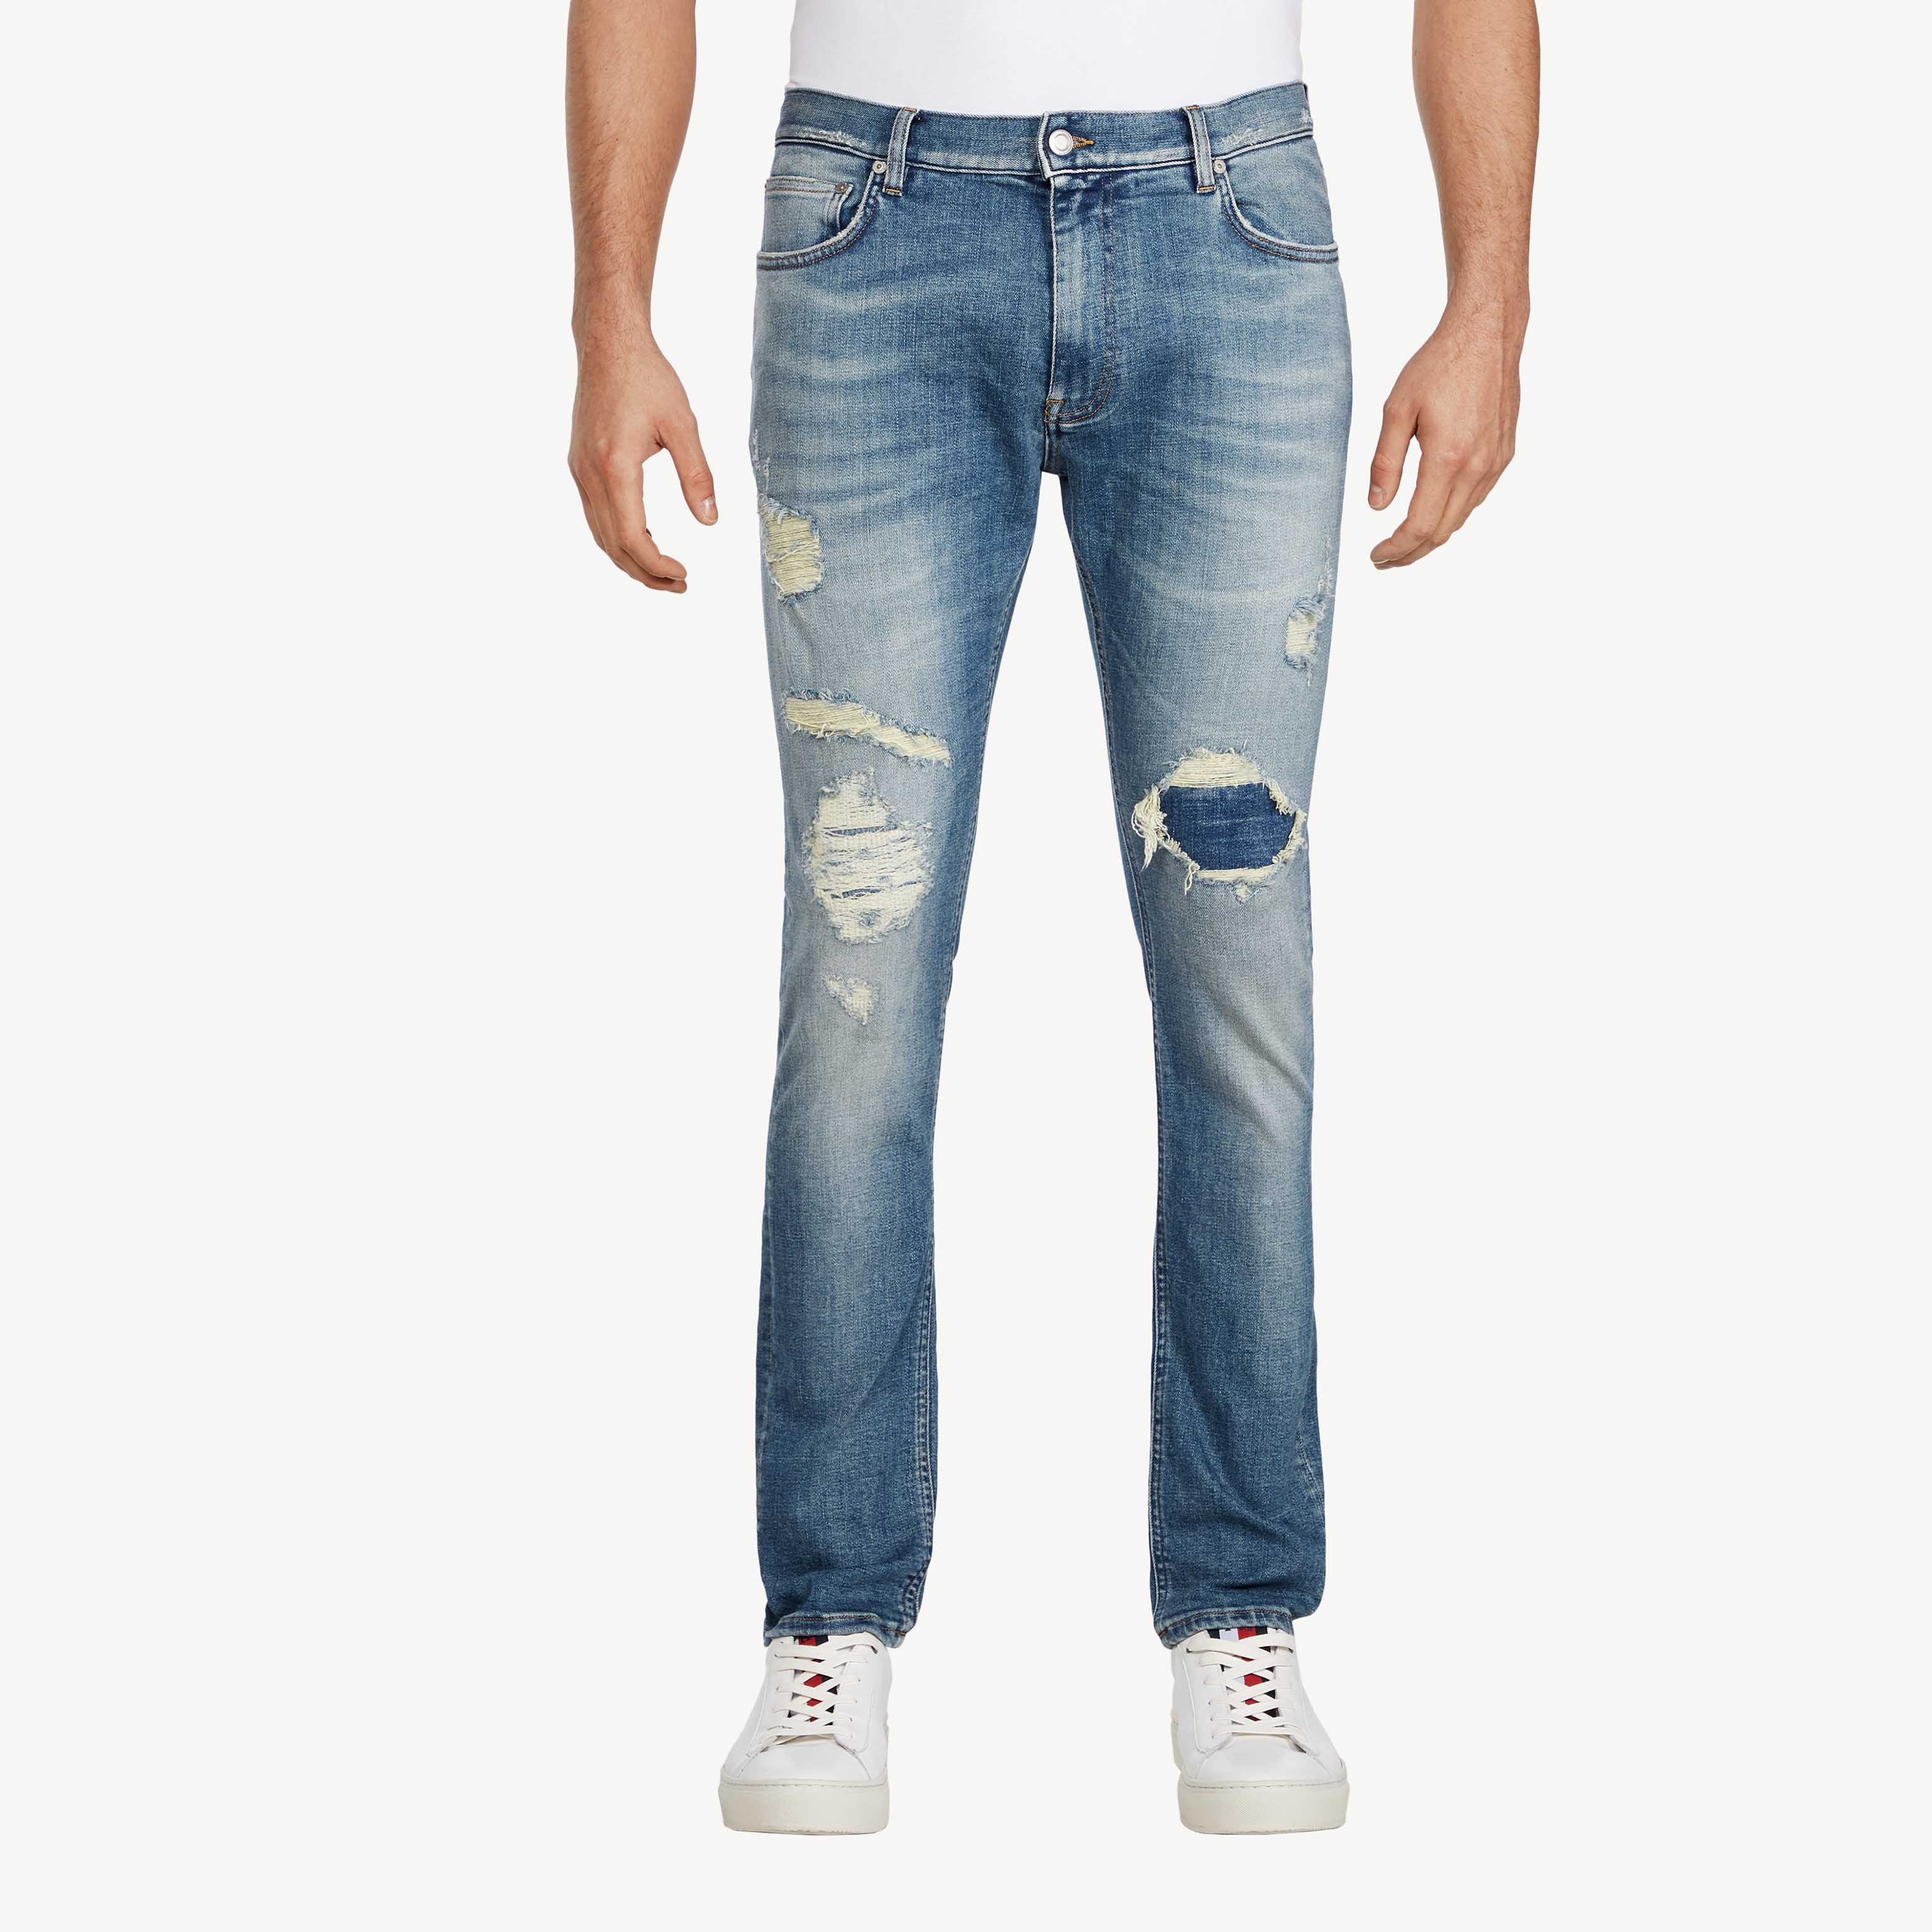 abercrombie star jeans